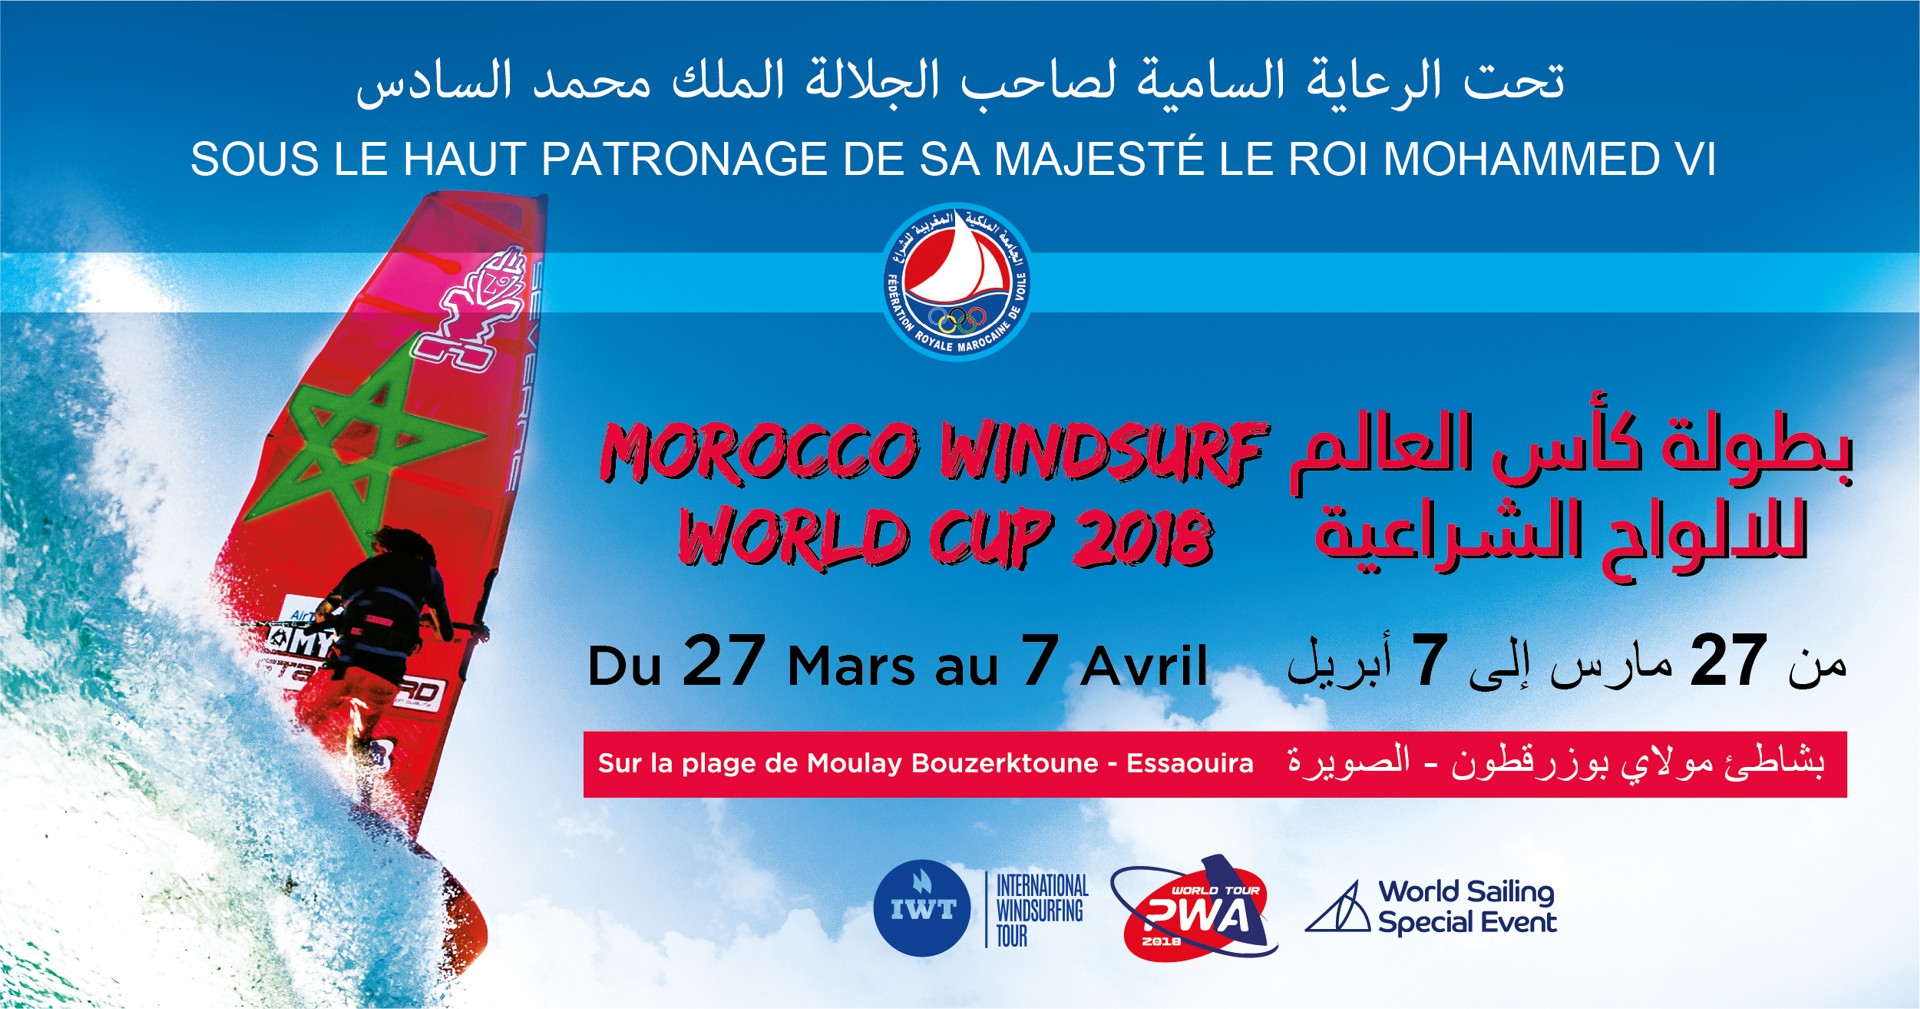 Morocco Windsurf World Cup